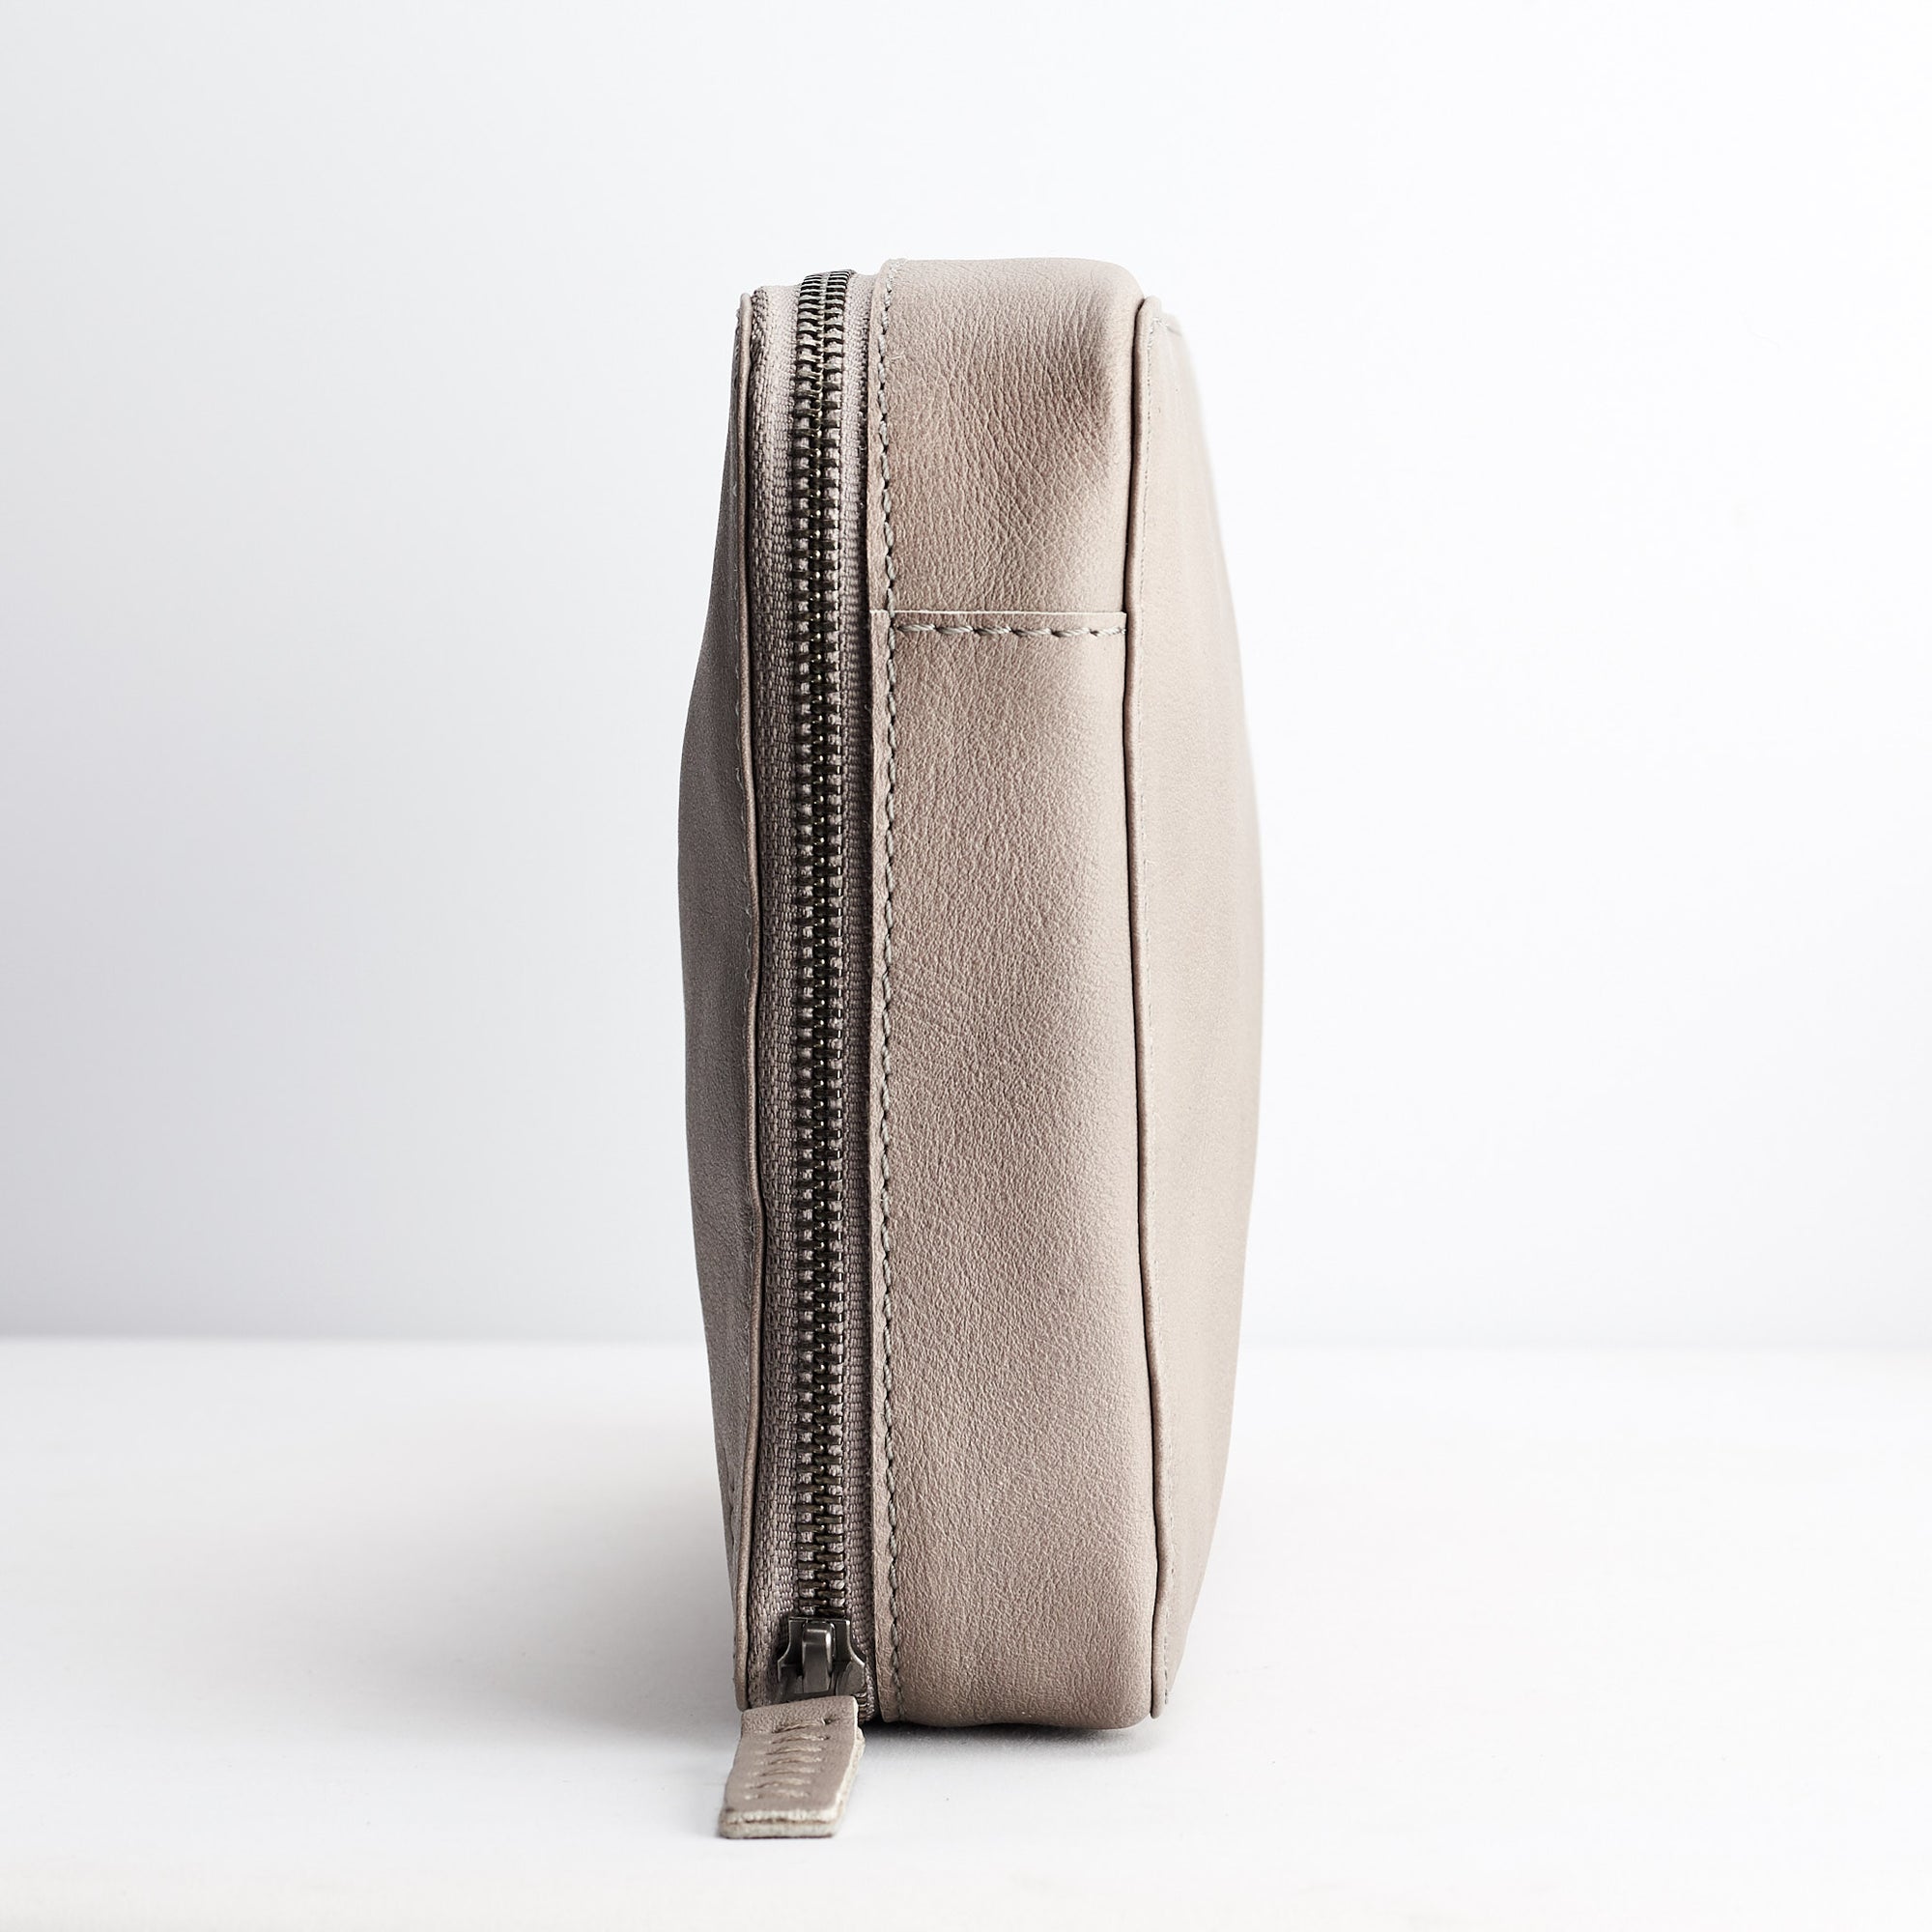 Grey tech gear zipper bag by Capra Leather